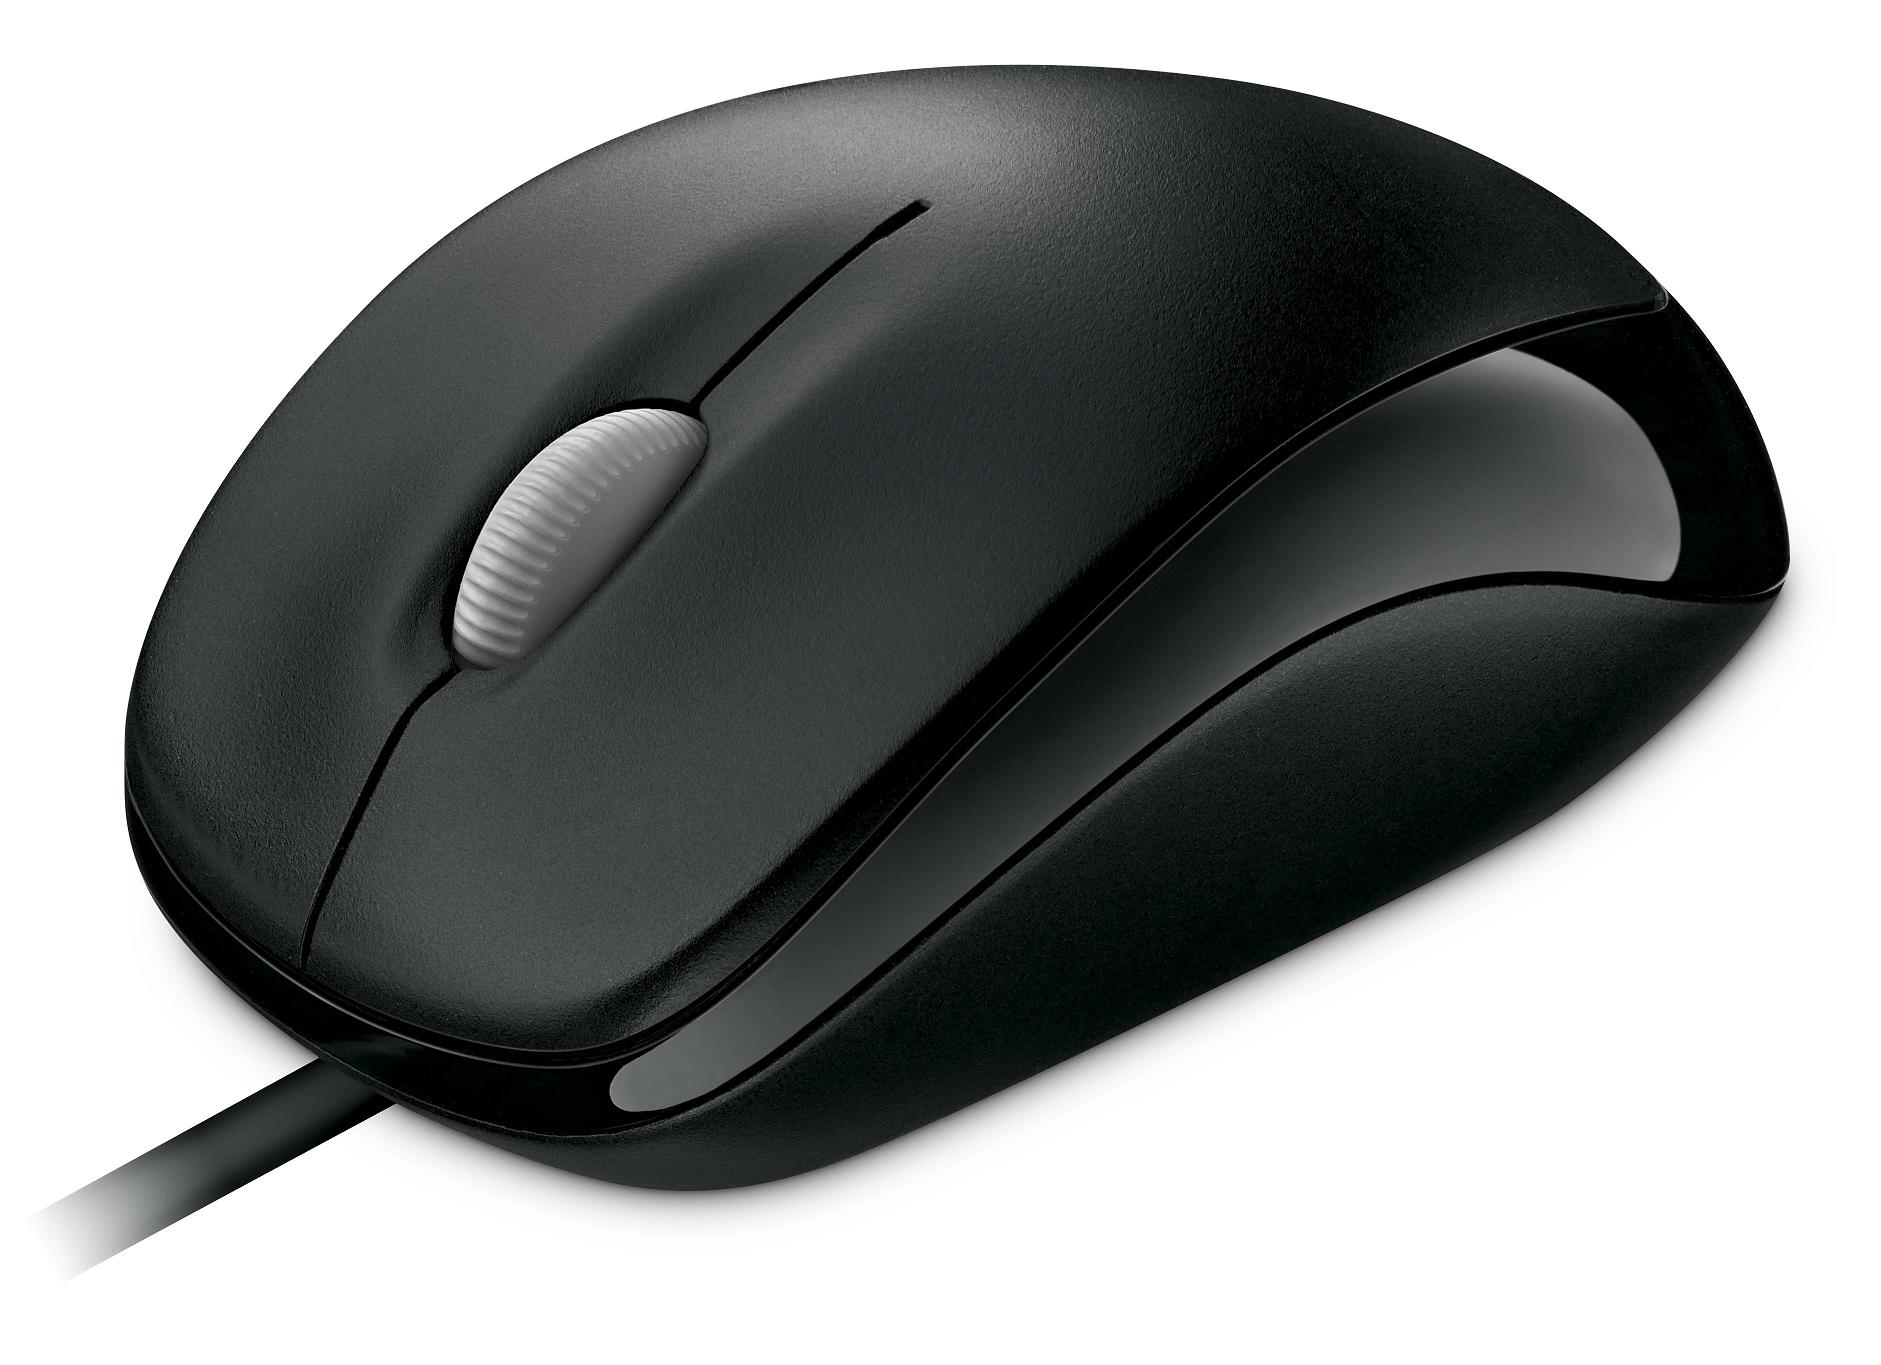 Мышь Mouse Microsoft Compact Optical Mouse 500 Black (800dpi, optical, USB, 3btn+Roll)Retail